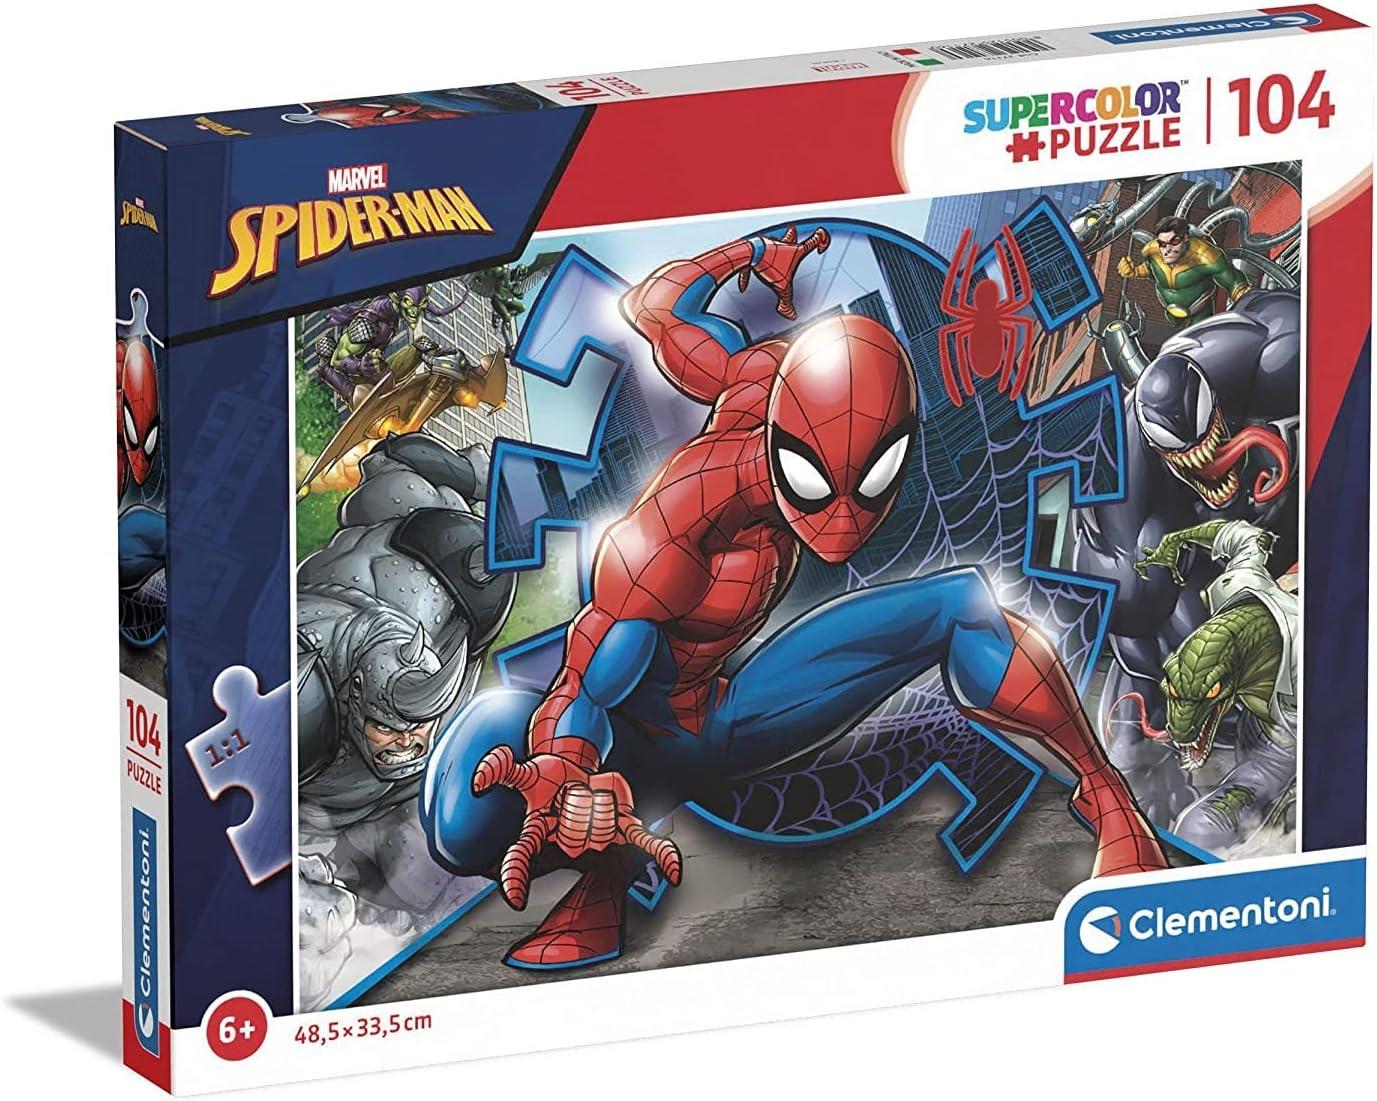 Clementoni Spiderman 104pc Puzzle